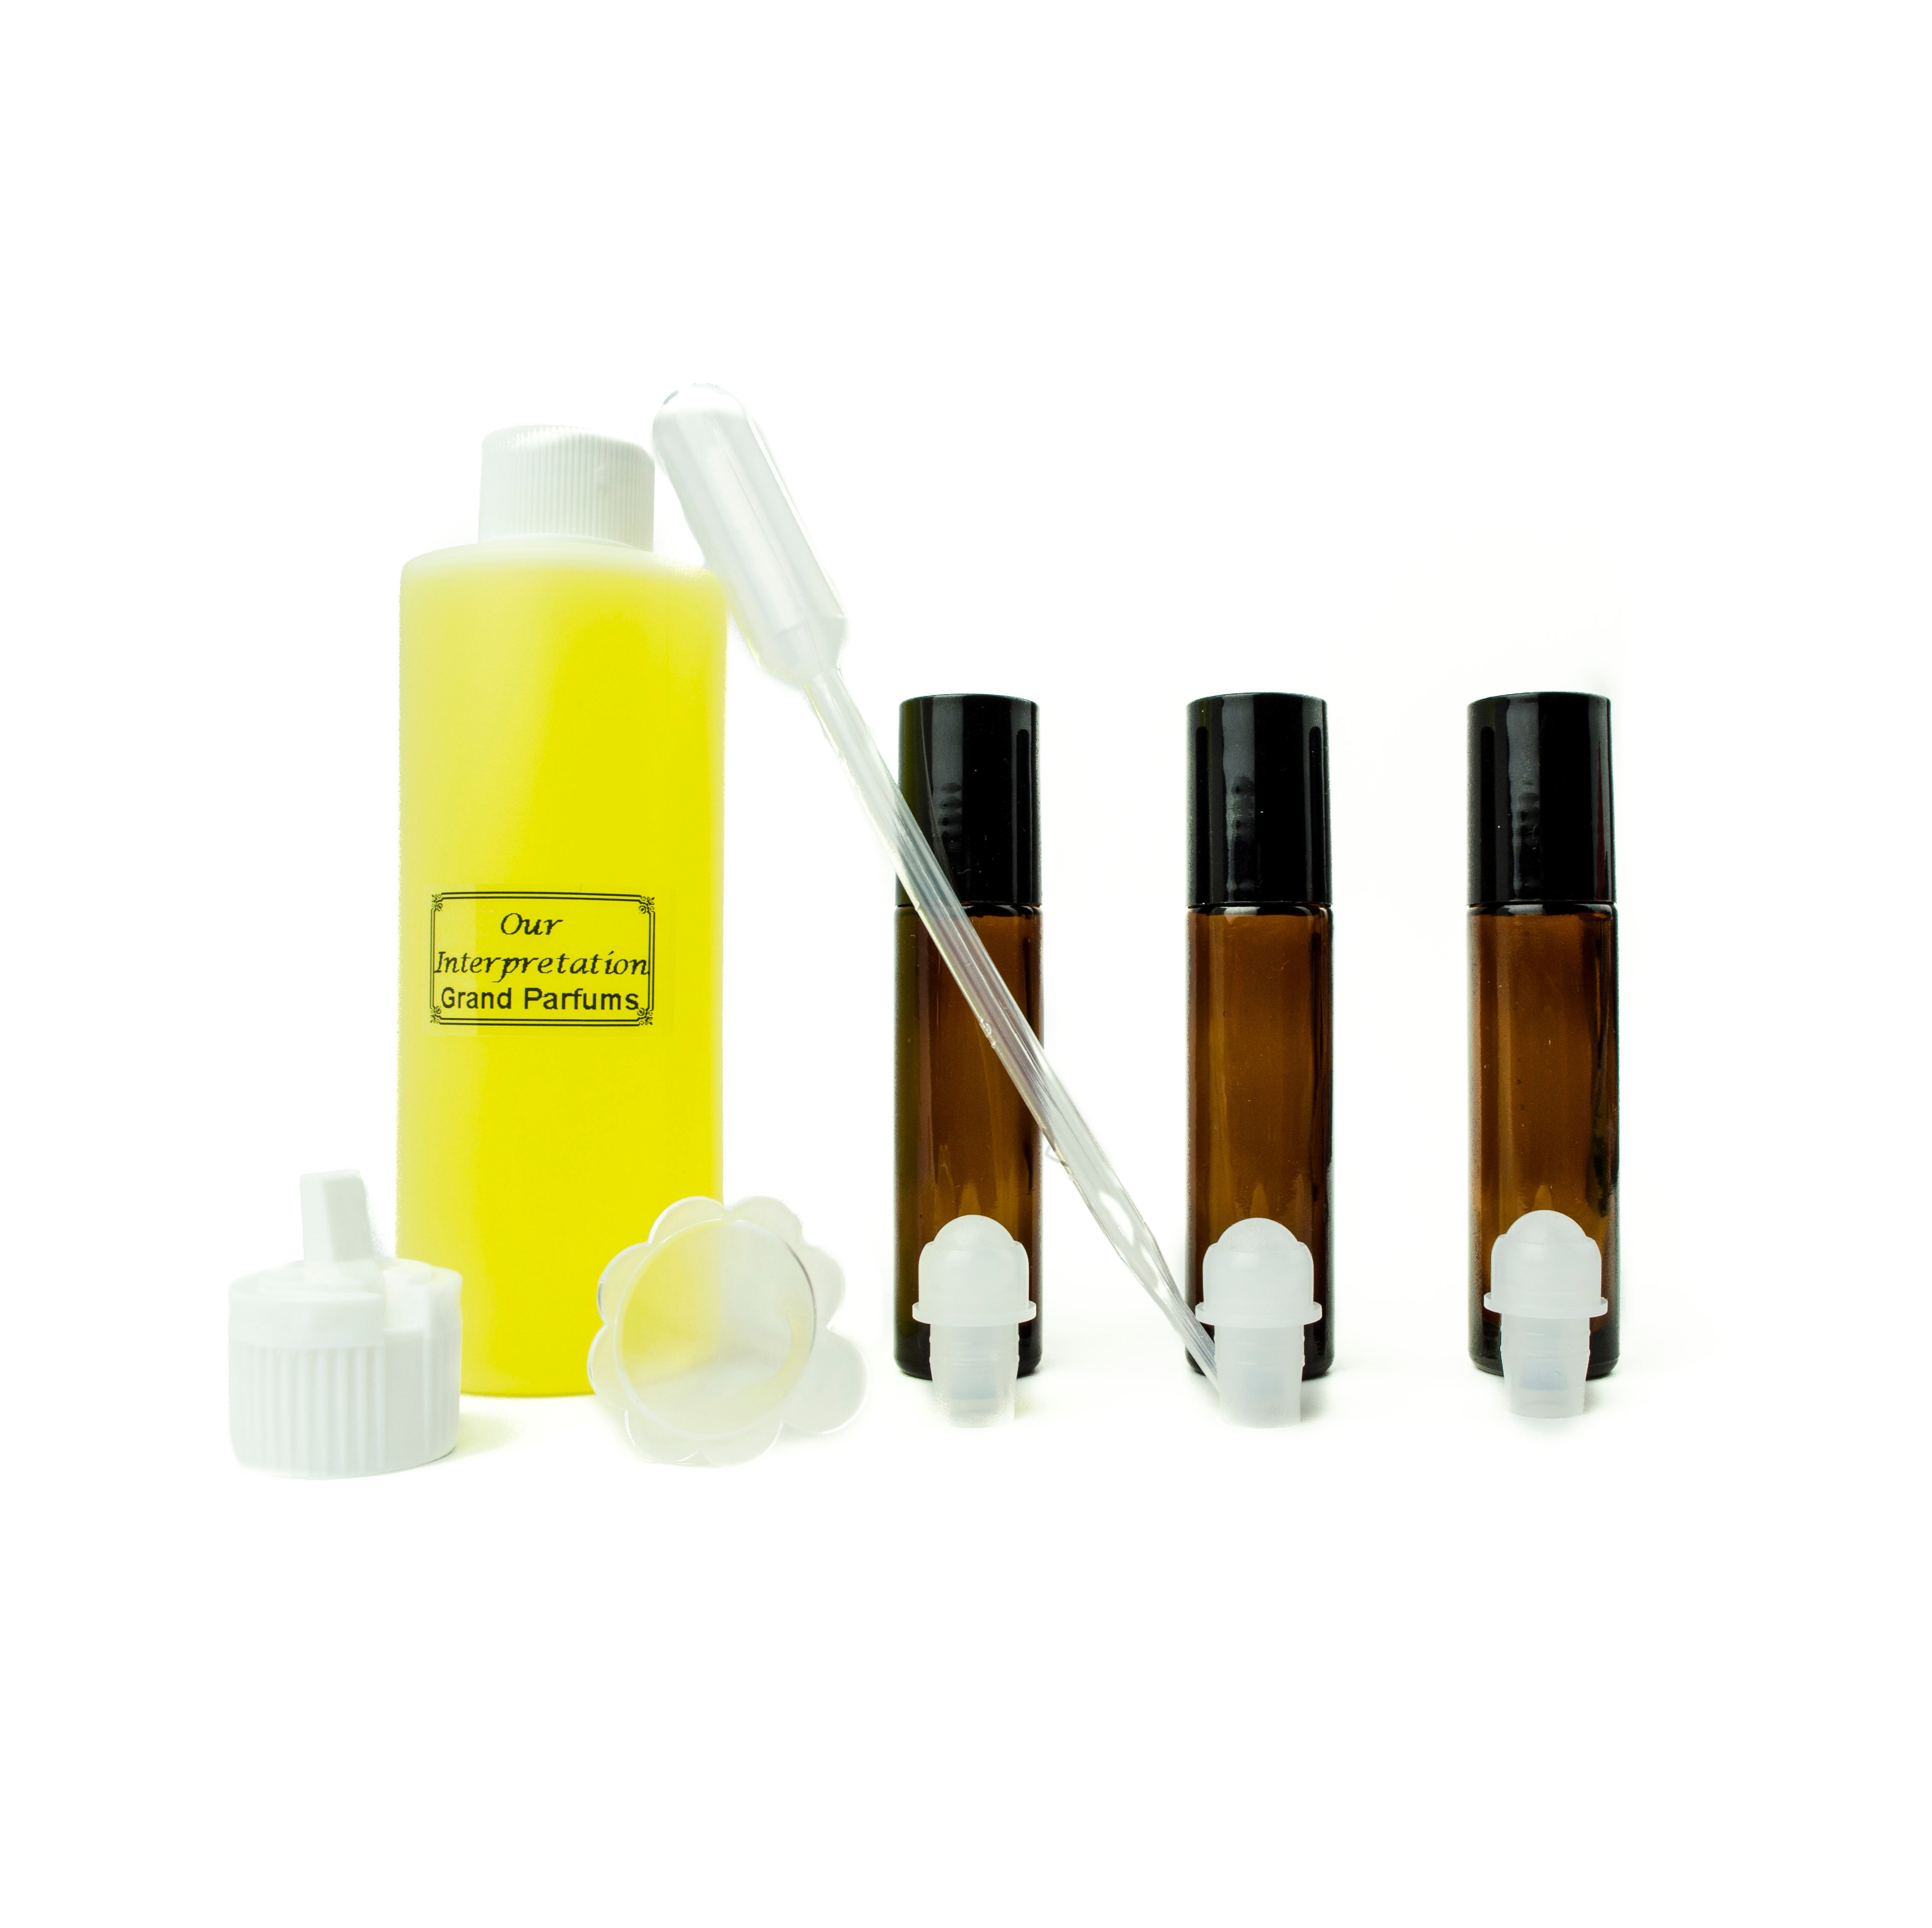 Grand Parfums Perfume Oil Set - Versense Body Oil For Men by Versace - Our Interpretation, w/Roll On BTLS &Tools to Fill Them (1 oz)